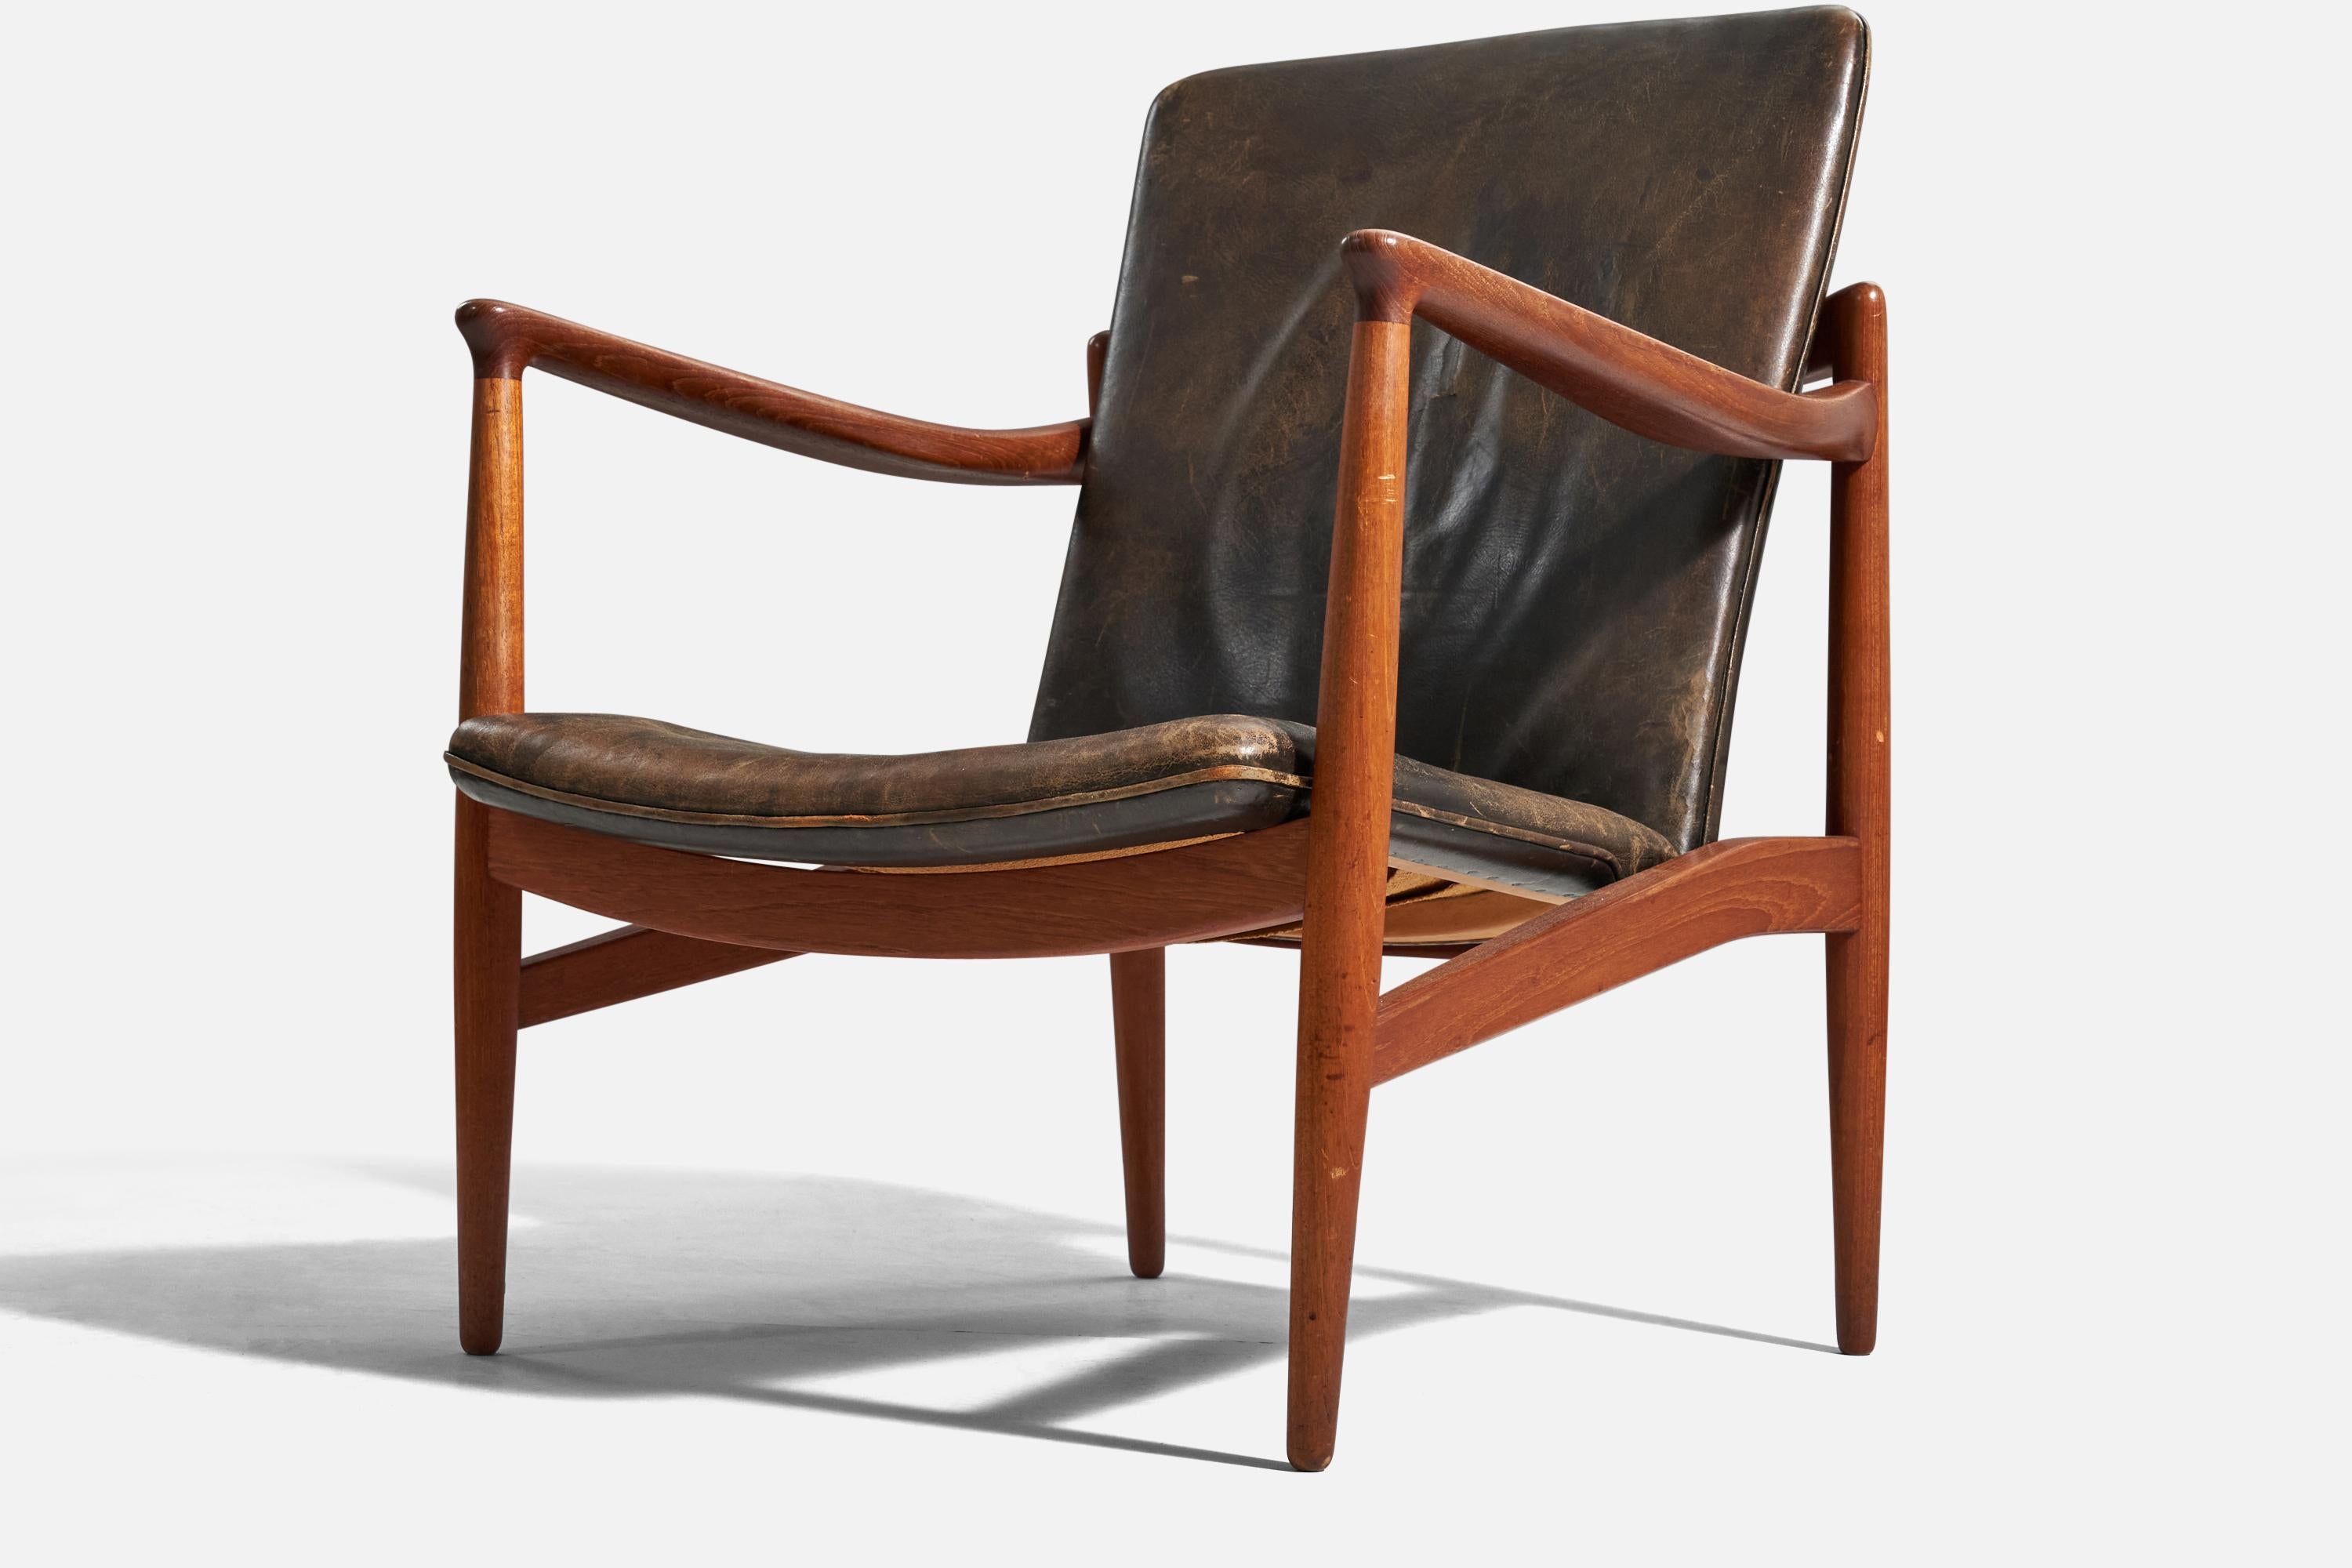 Scandinavian Modern Jacob Kjaer, Adjustable Lounge Chair, Teak, Leather, Denmark, 1945 For Sale